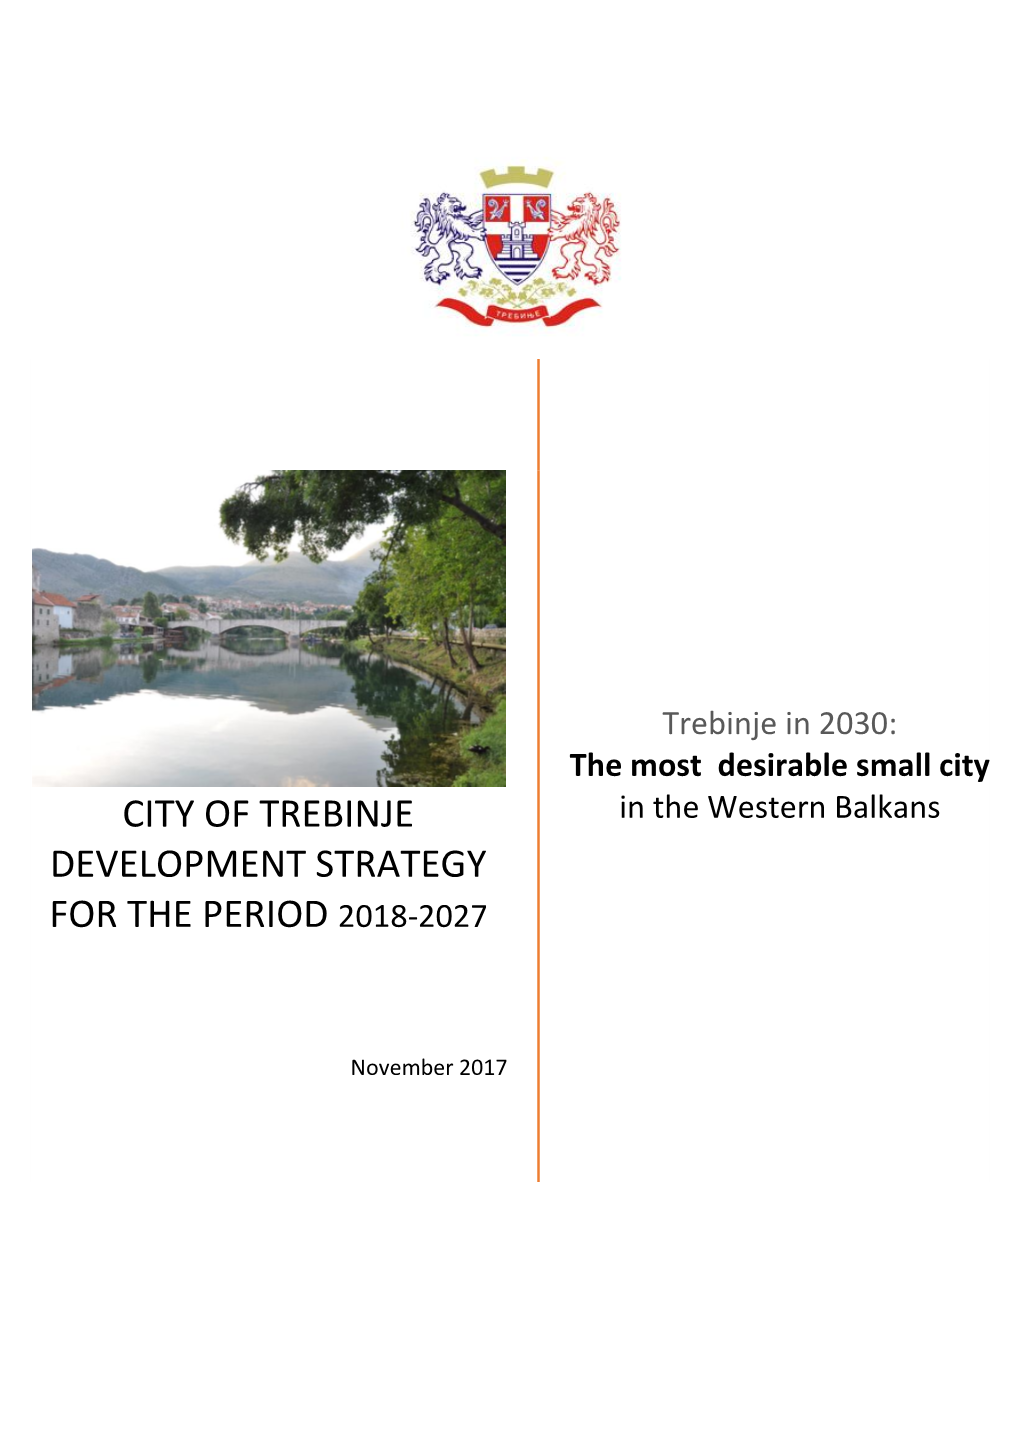 City of Trebinje Development Strategy for the Period 2018-2027